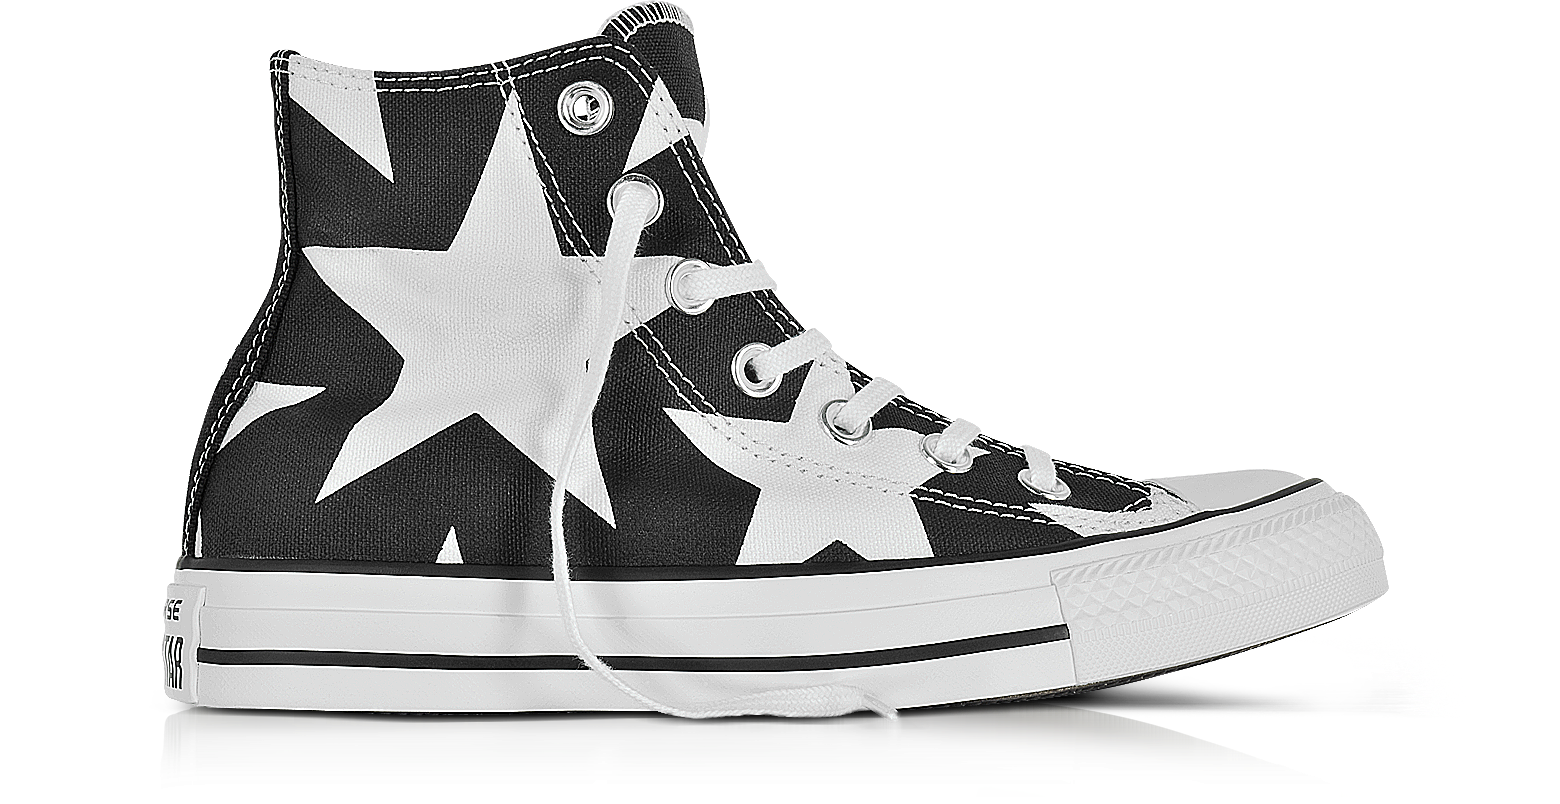 Chuck Taylor All Star High Sneakers in Canvas Nero con Stelle Bianche  Oversize Converse Limited Edition 3.5 (36 EU) su FORZIERI